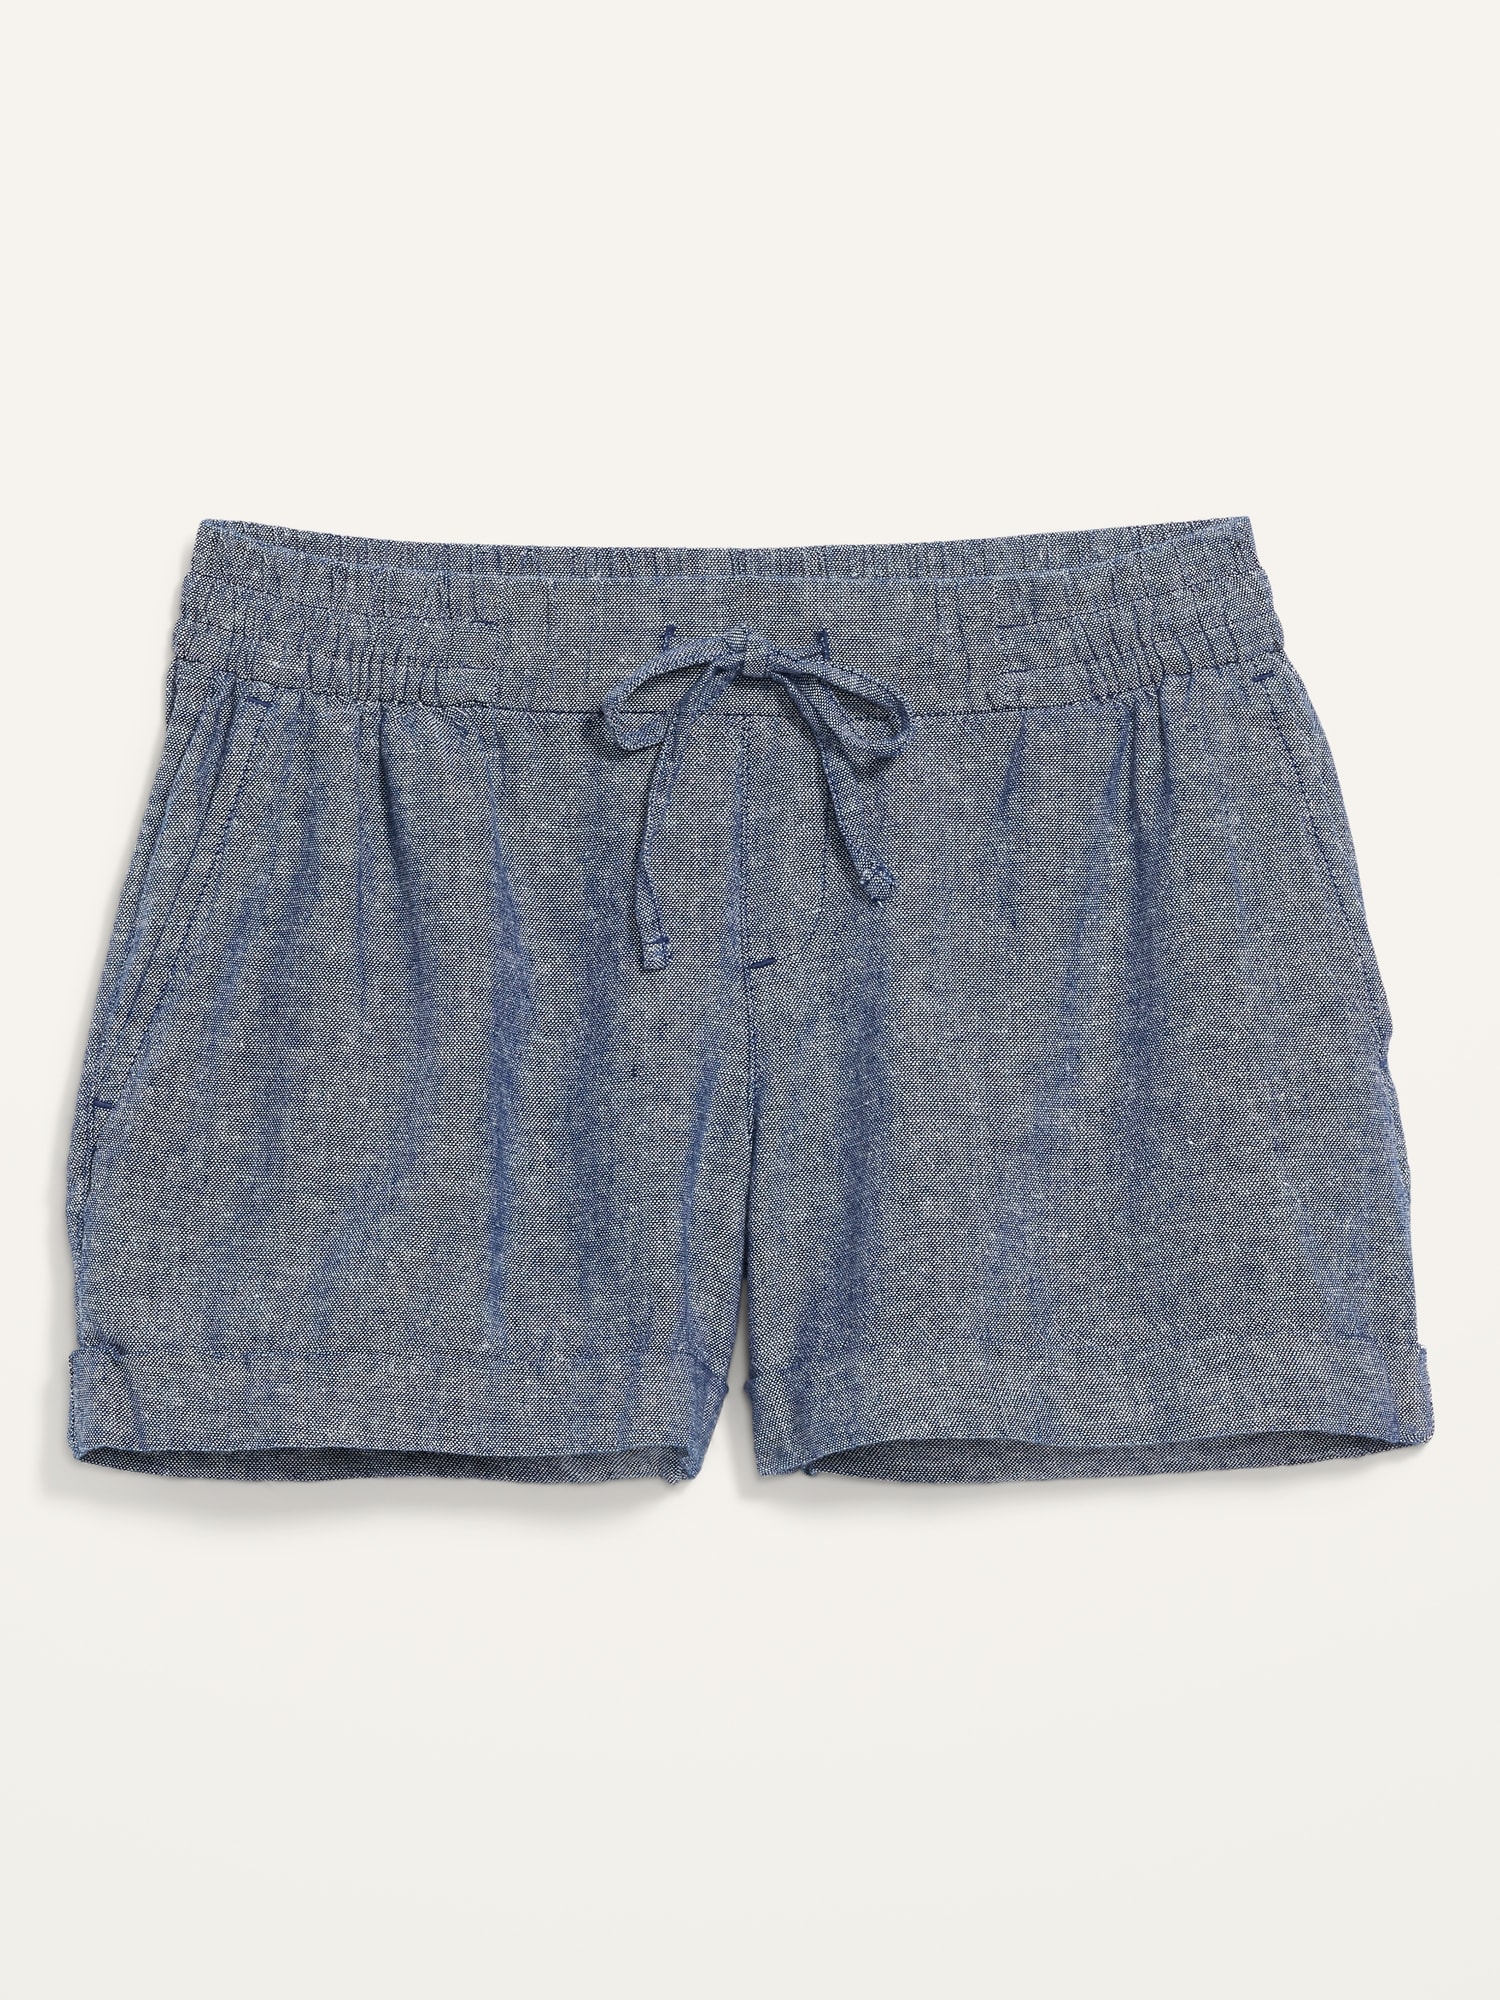 Mid-Rise Linen-Blend Shorts for Women - 4-inch inseam